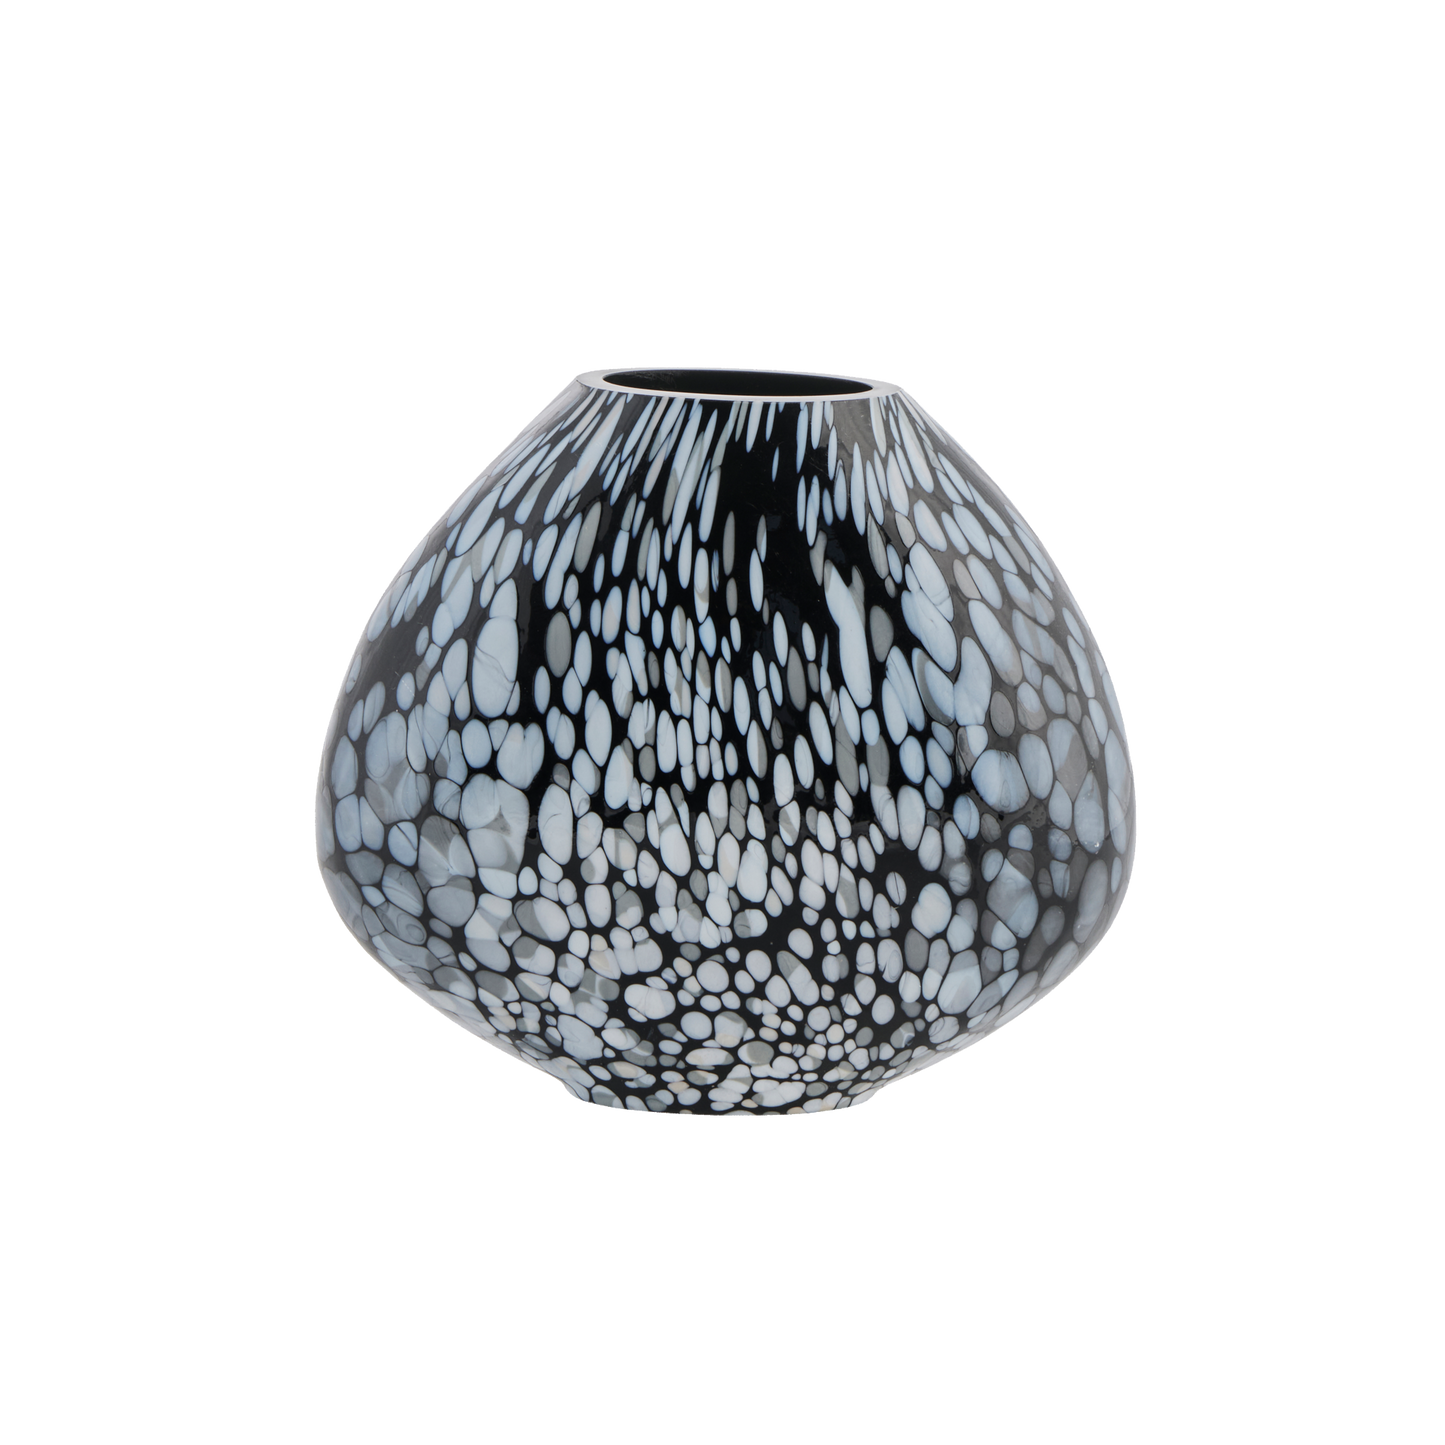 Small patterned glass vase, black